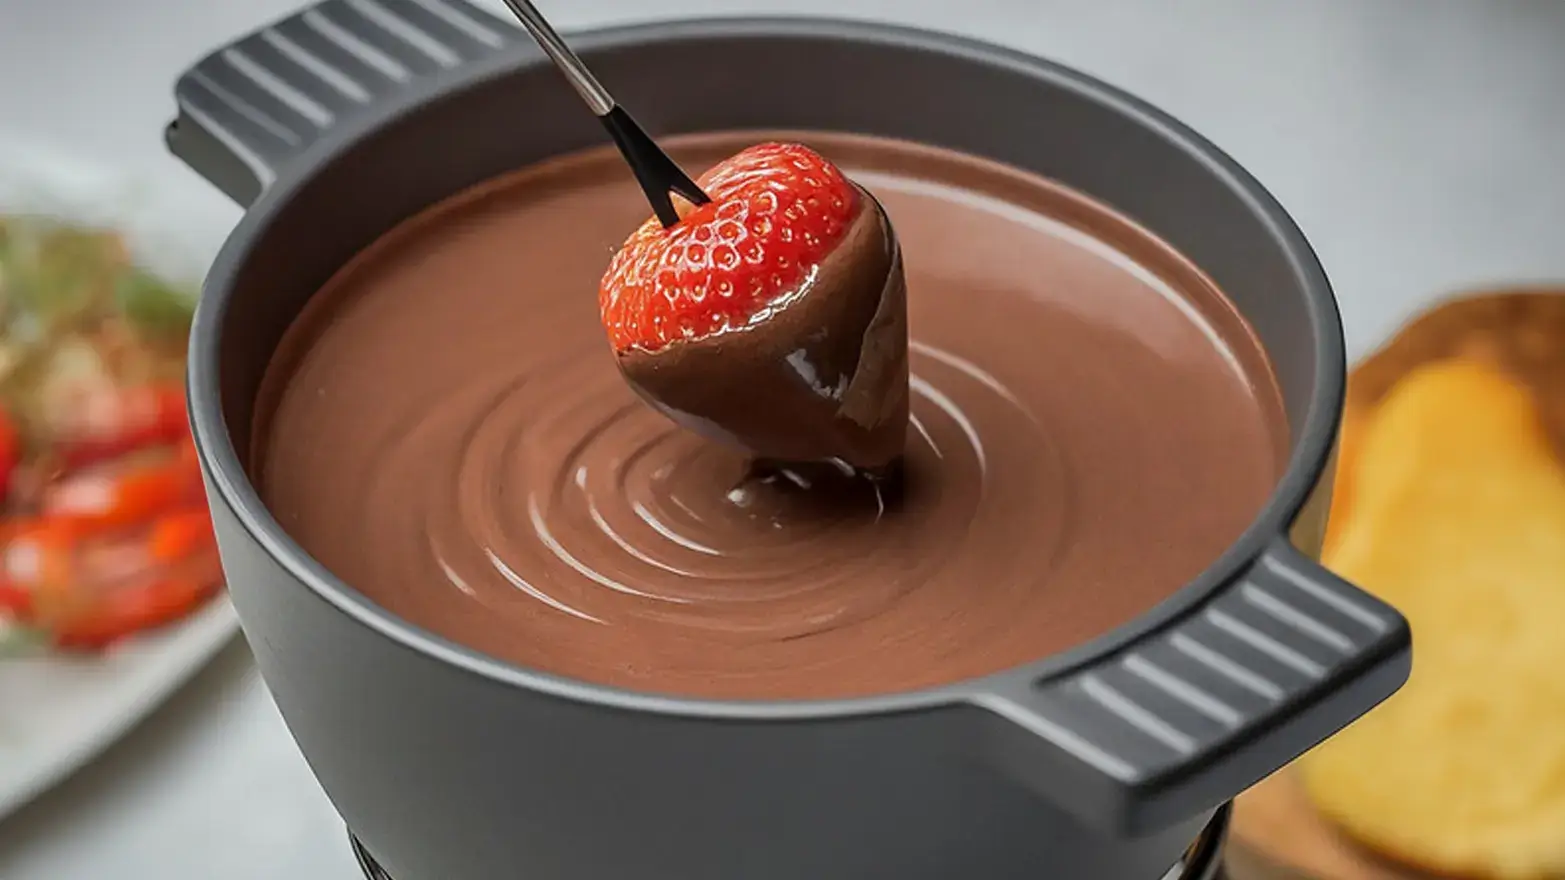 Chocolate fondue station